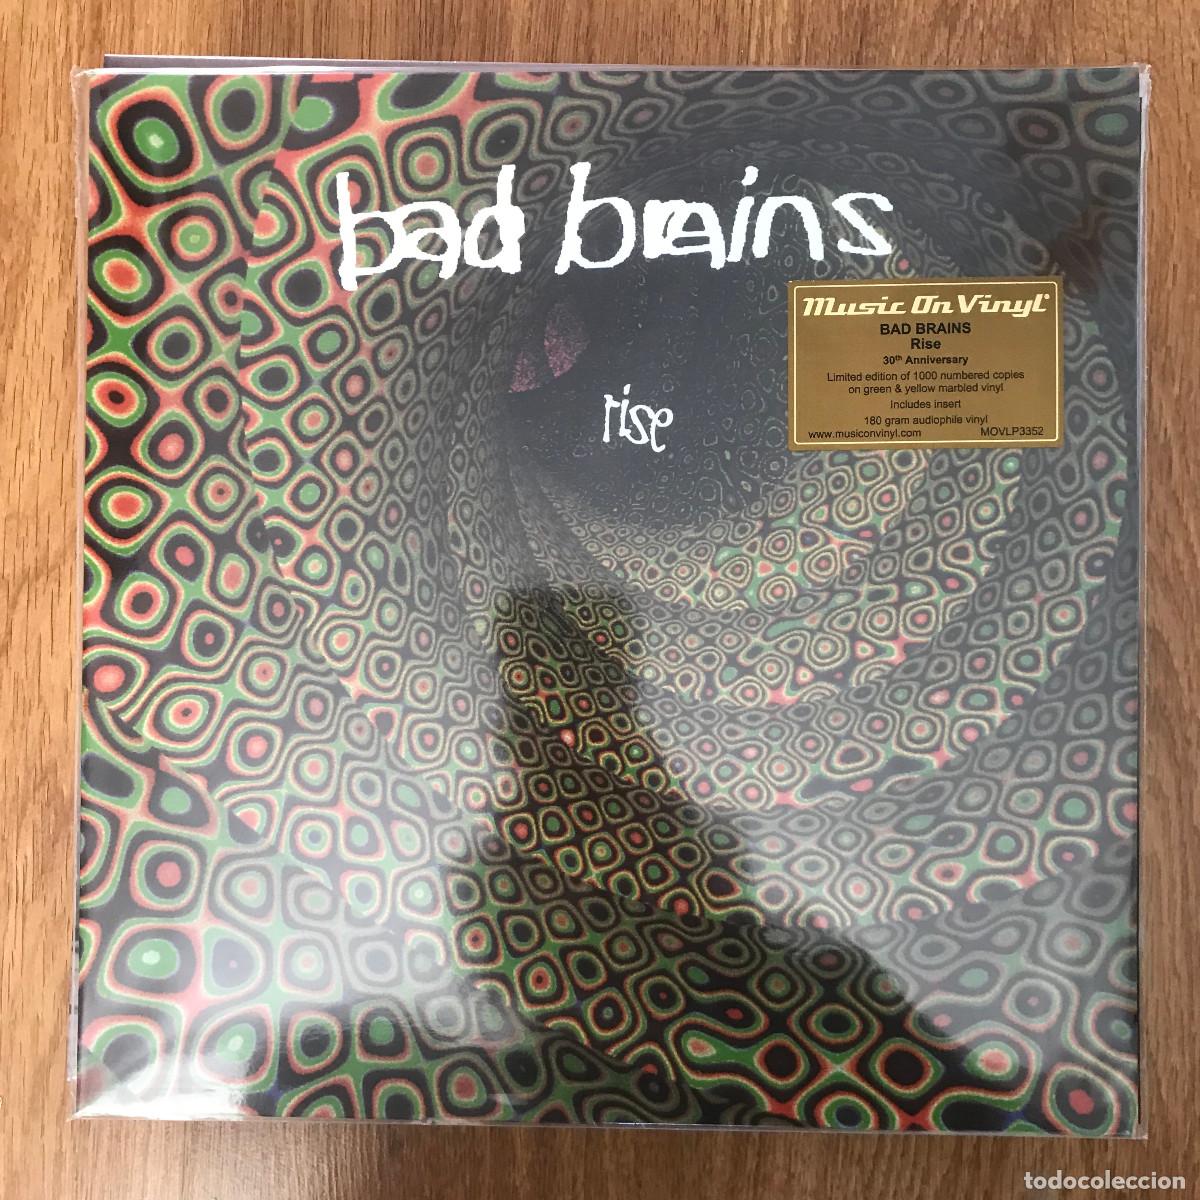 BAD BRAINS - RISE - Music On Vinyl